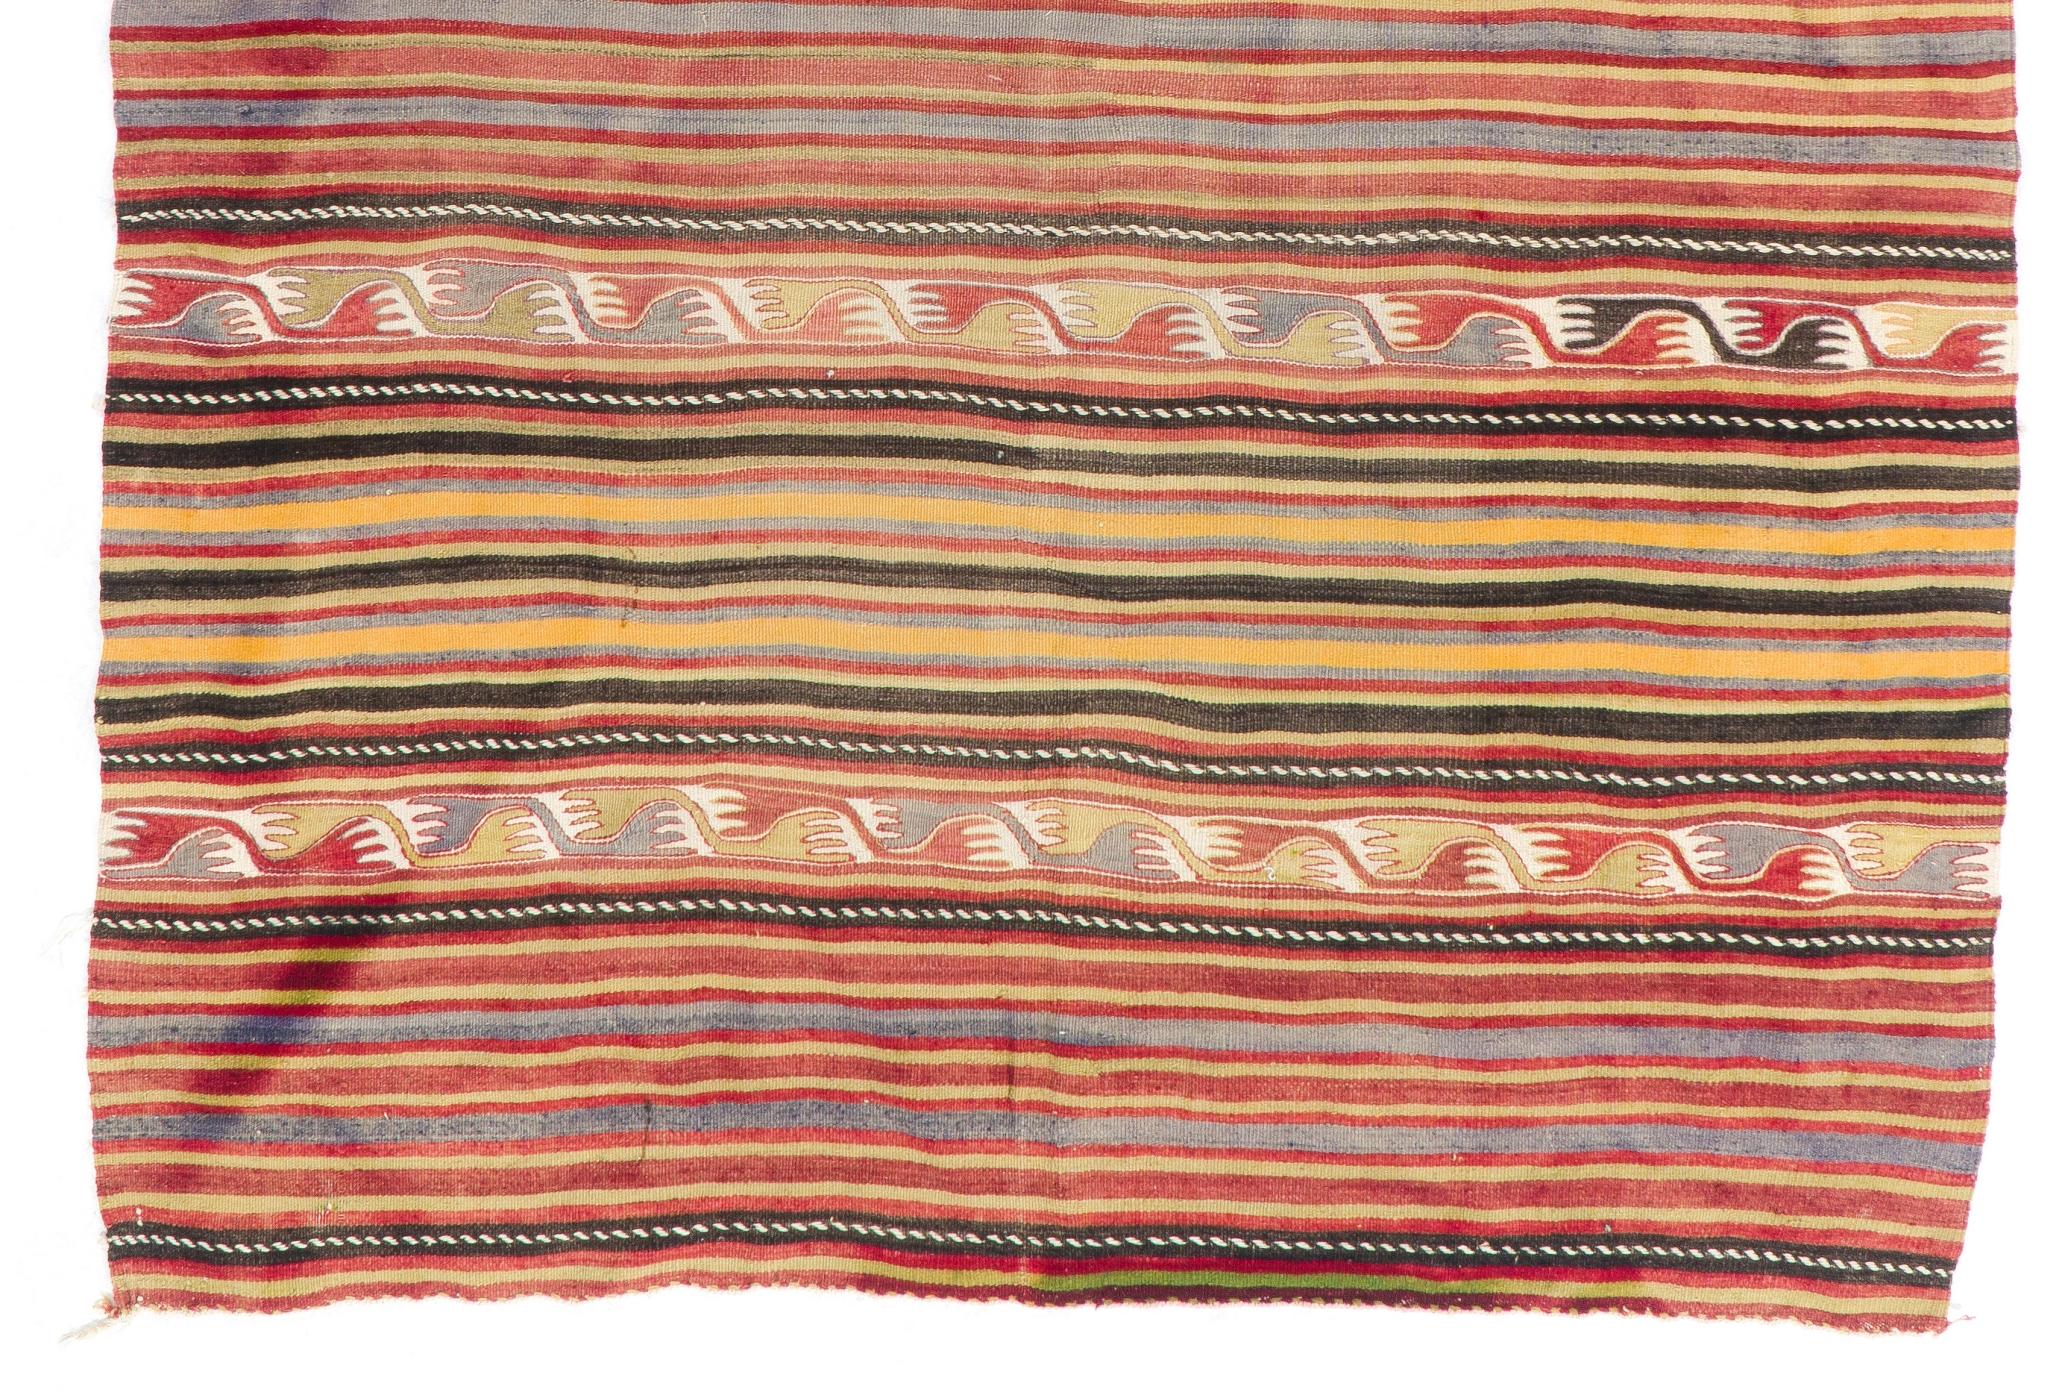 Hand-Woven 5.8x7.8 Ft Vintage Striped Pattern Turkish Kilim Rug. Flat-Weave Wool Carpet For Sale